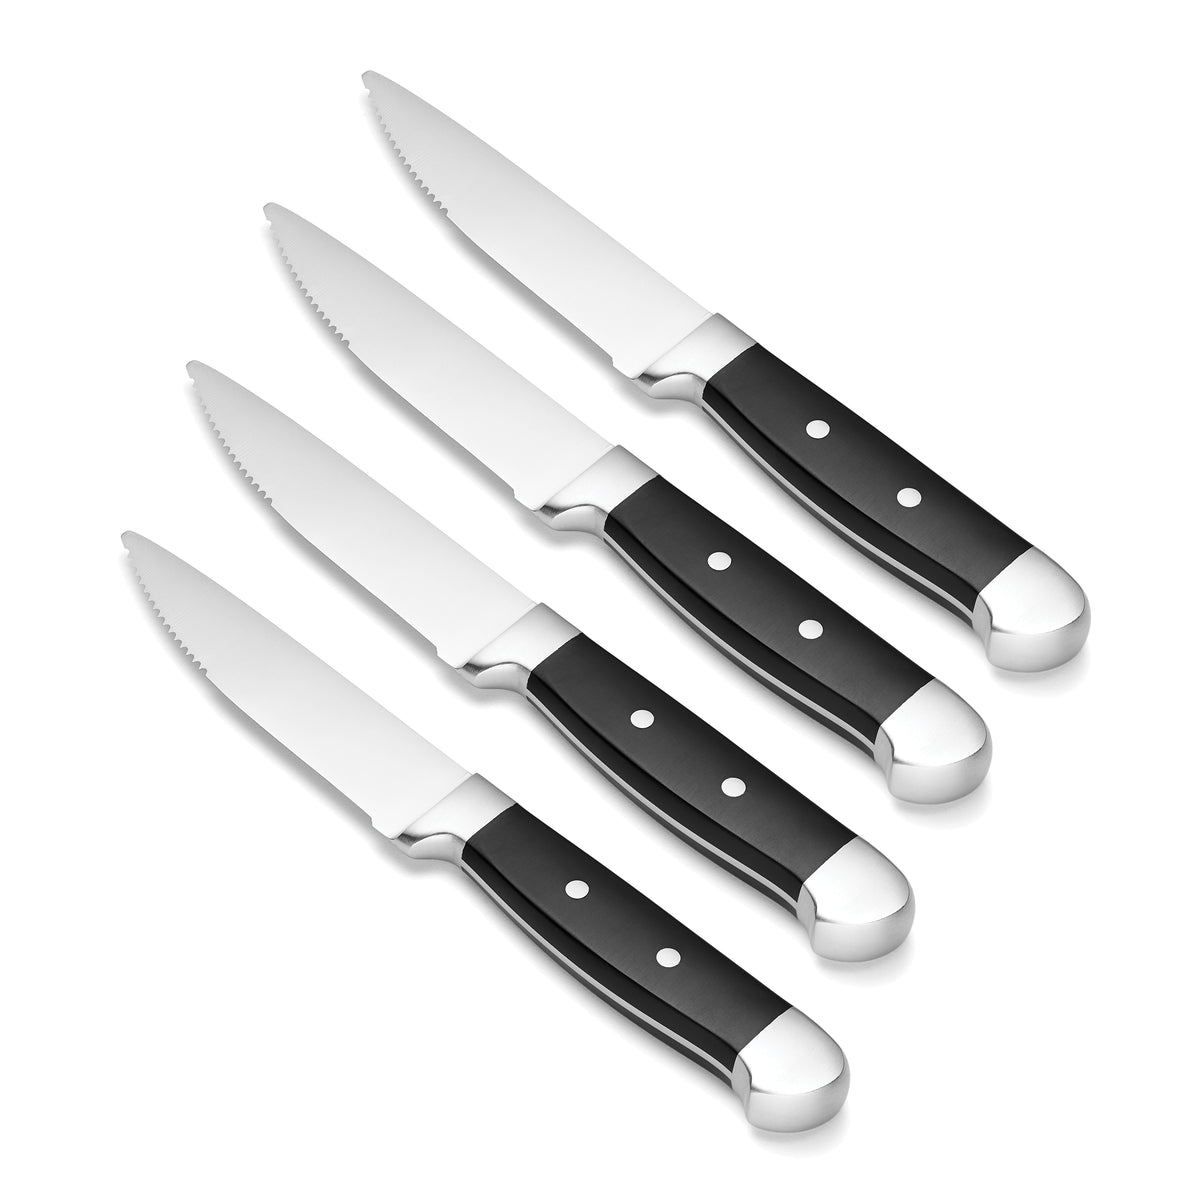 Oneida - B907KSSZ Rustic Wood Steak Knives (Set of 12)